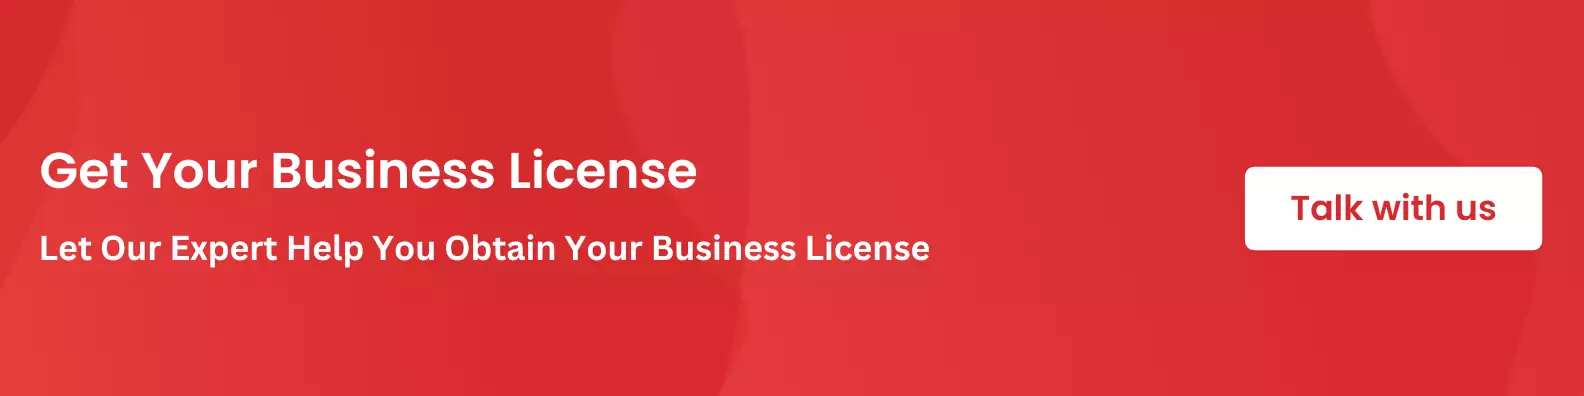 business-license-CTA-banner